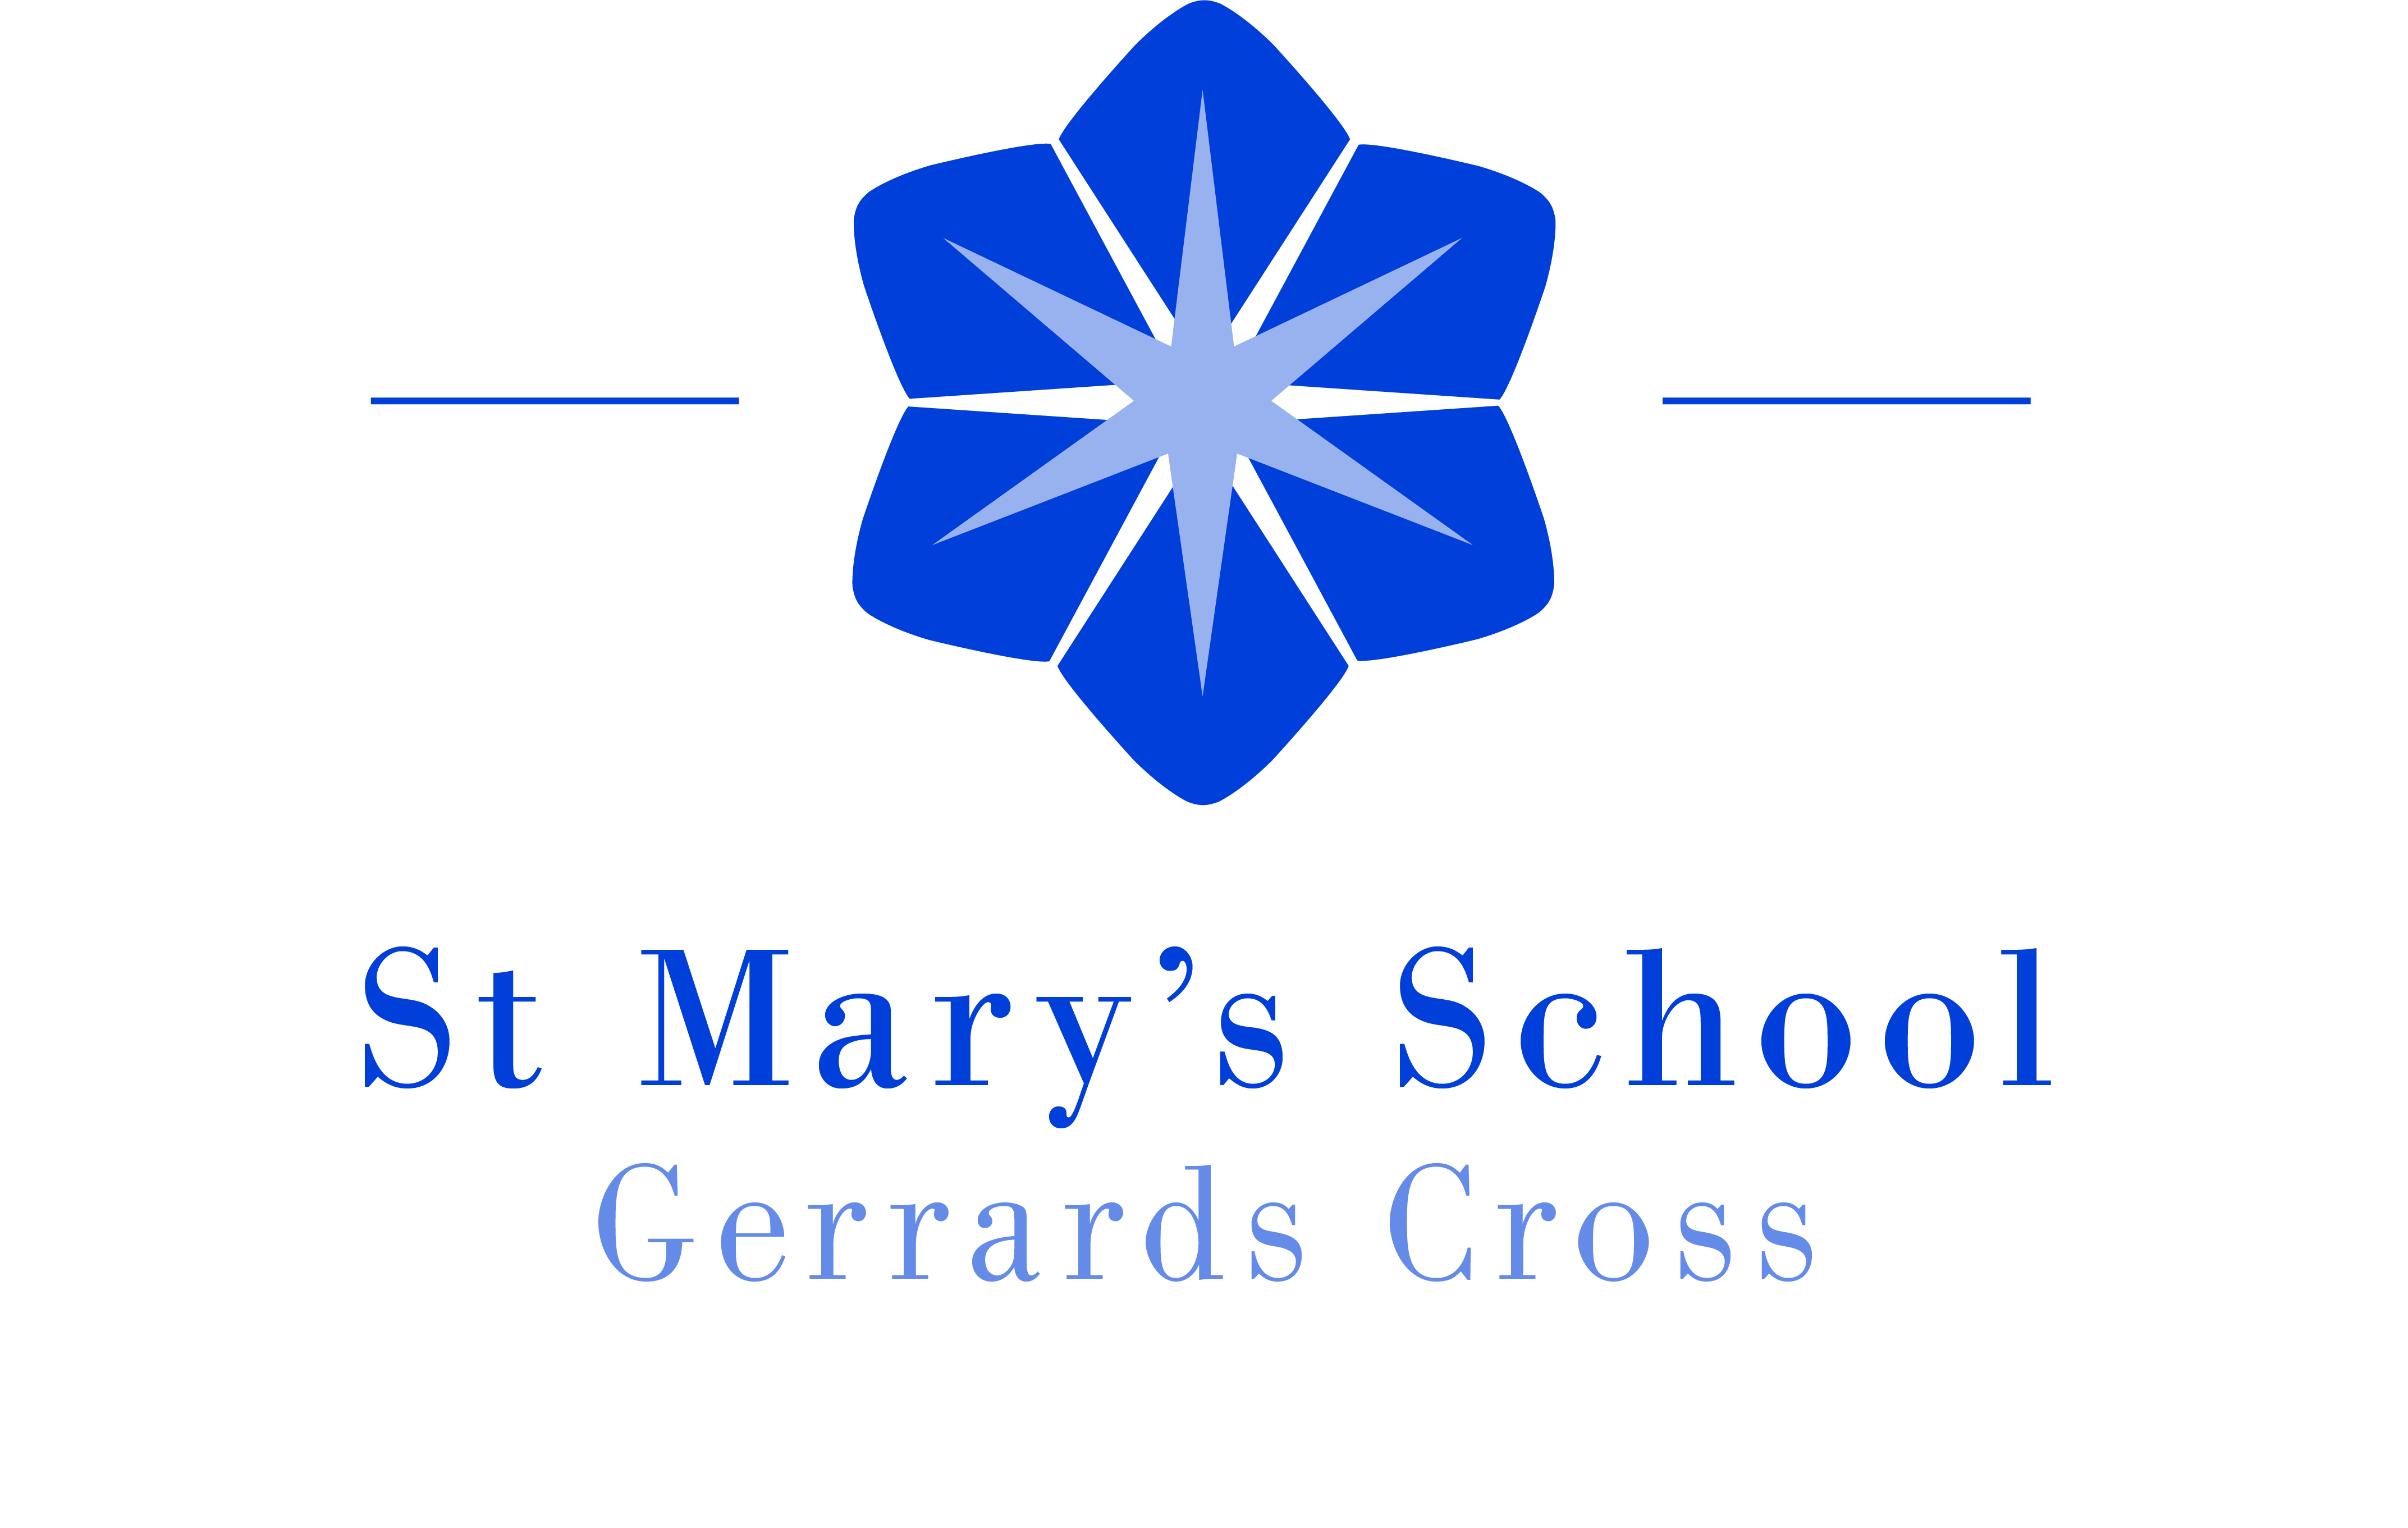 St Mary's School, Gerrards Cross